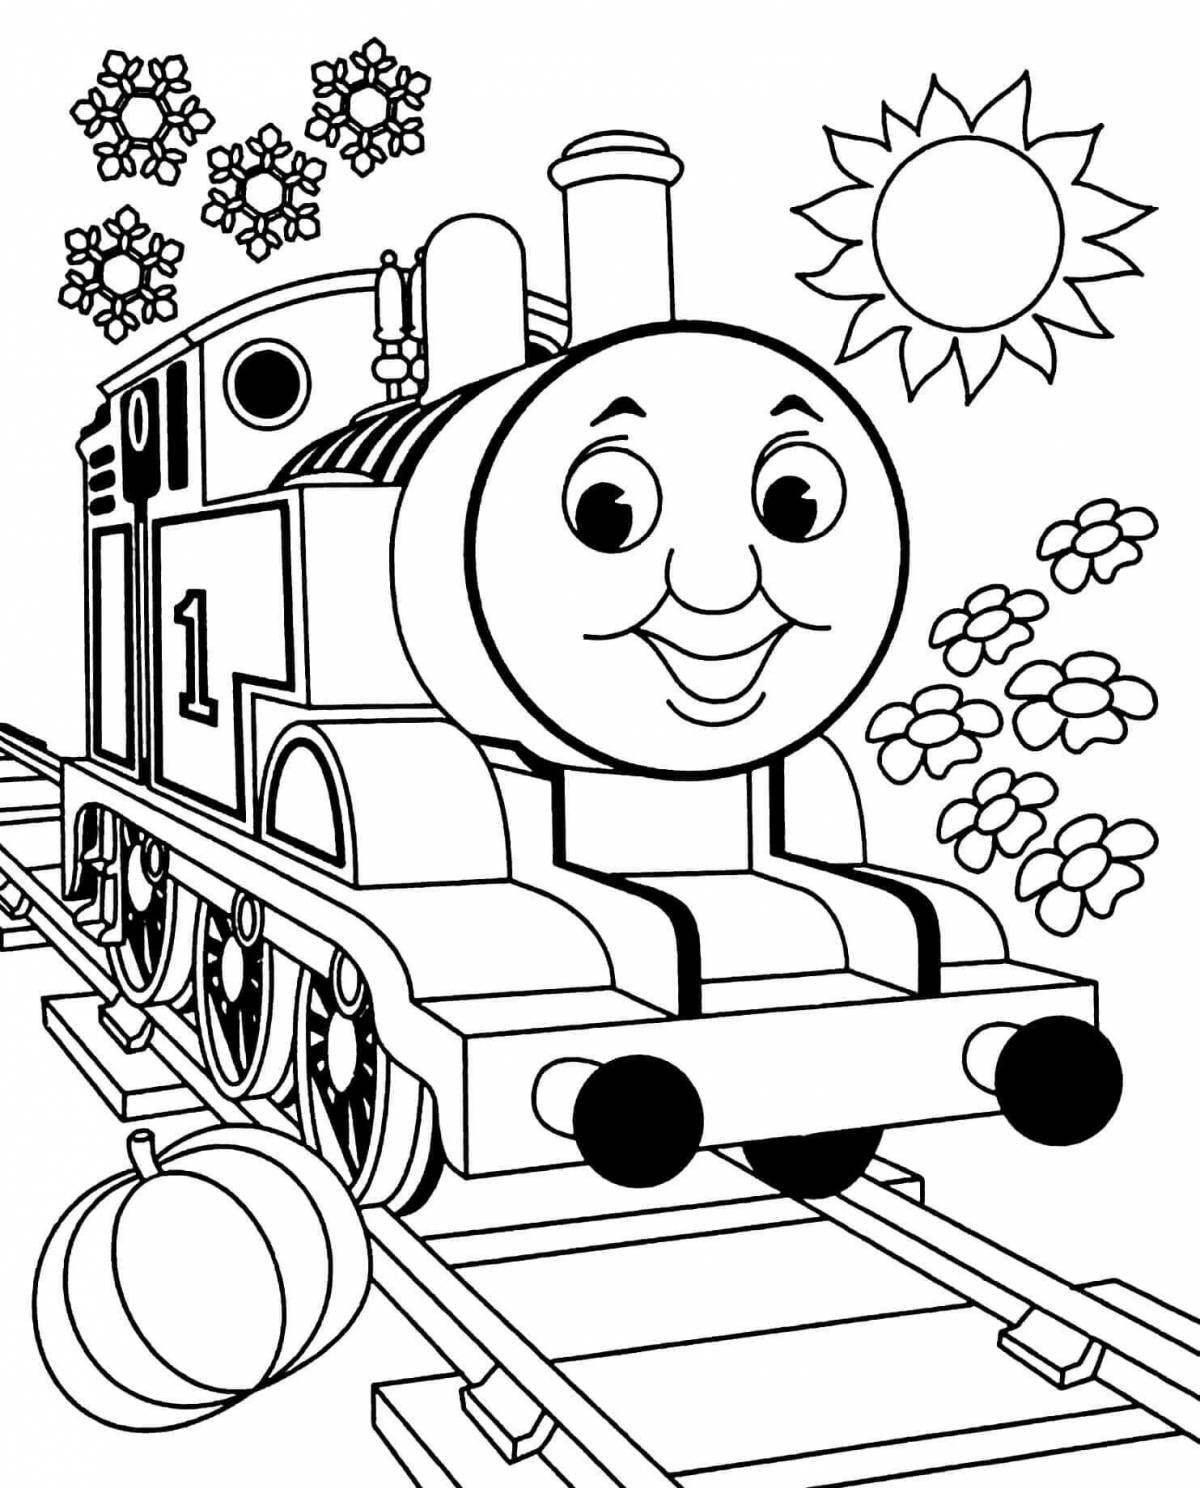 Thomas the Tank Engine fun coloring book